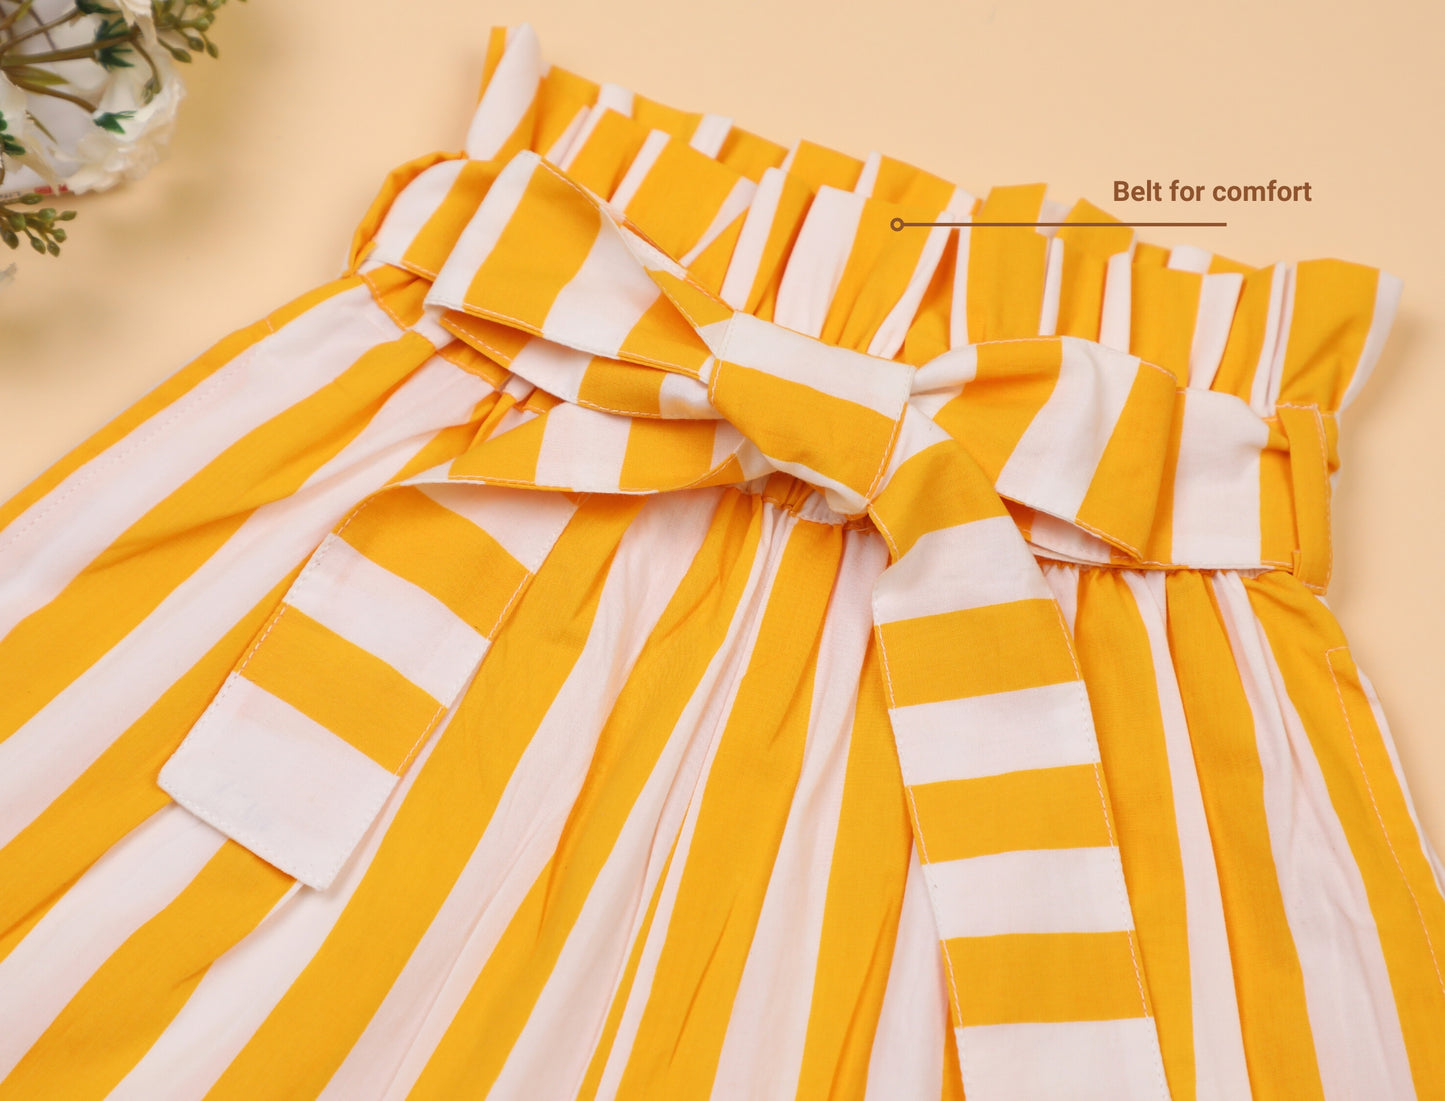 Girls Kids Pure Cotton Summer Striped Shorts (Yellow)